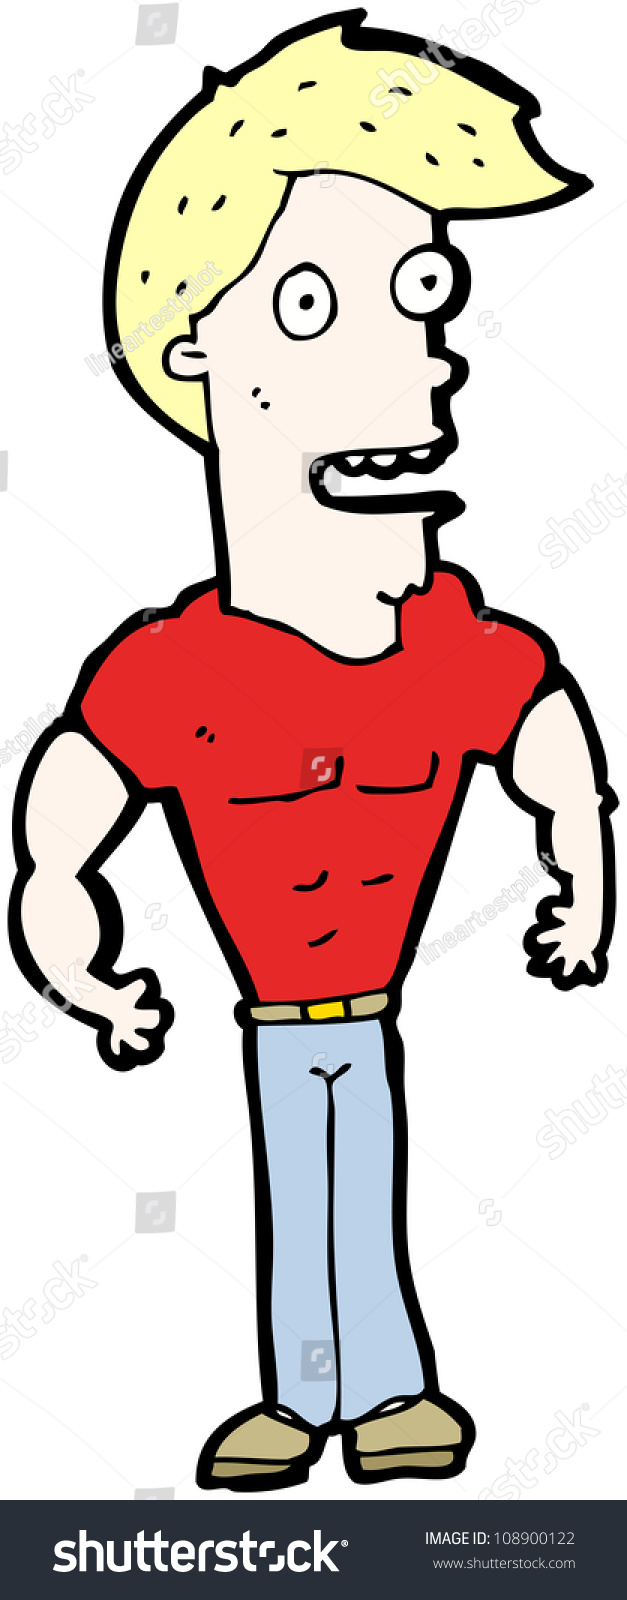 Cartoon Muscle Man Stock Photo 108900122 : Shutterstock